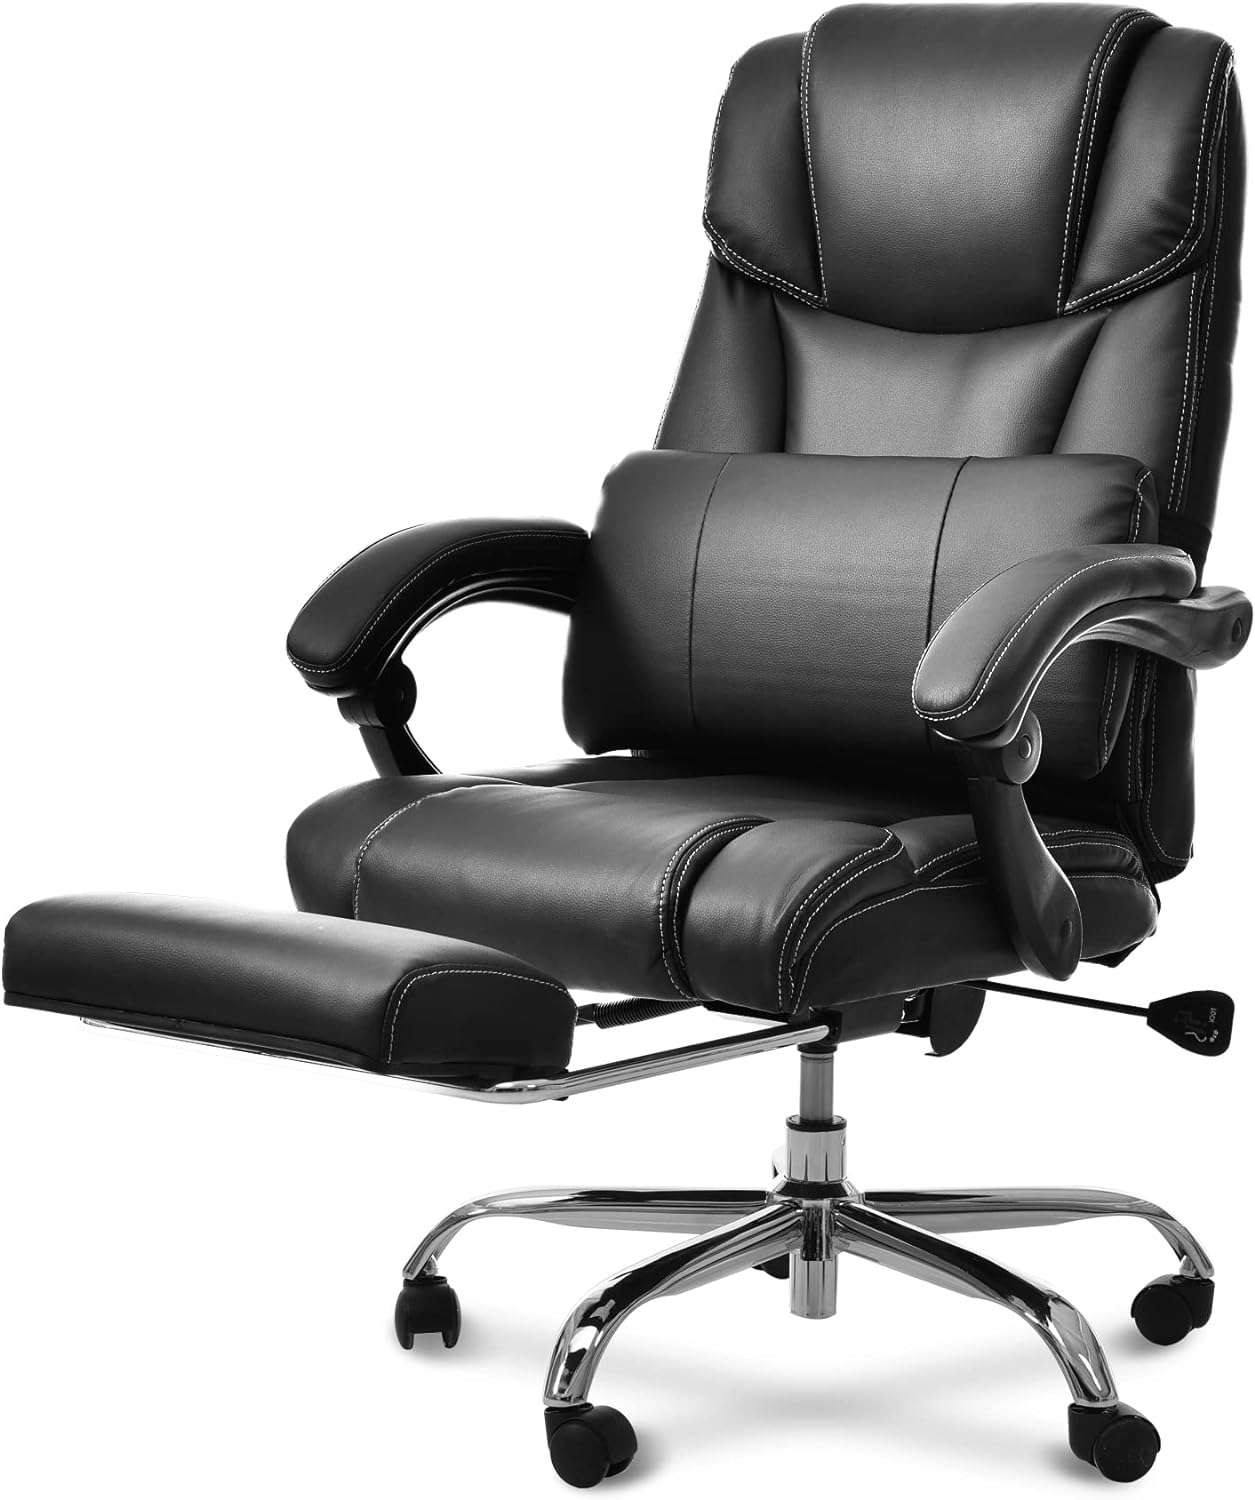 Merax Gaming Recliner Gaming Chair